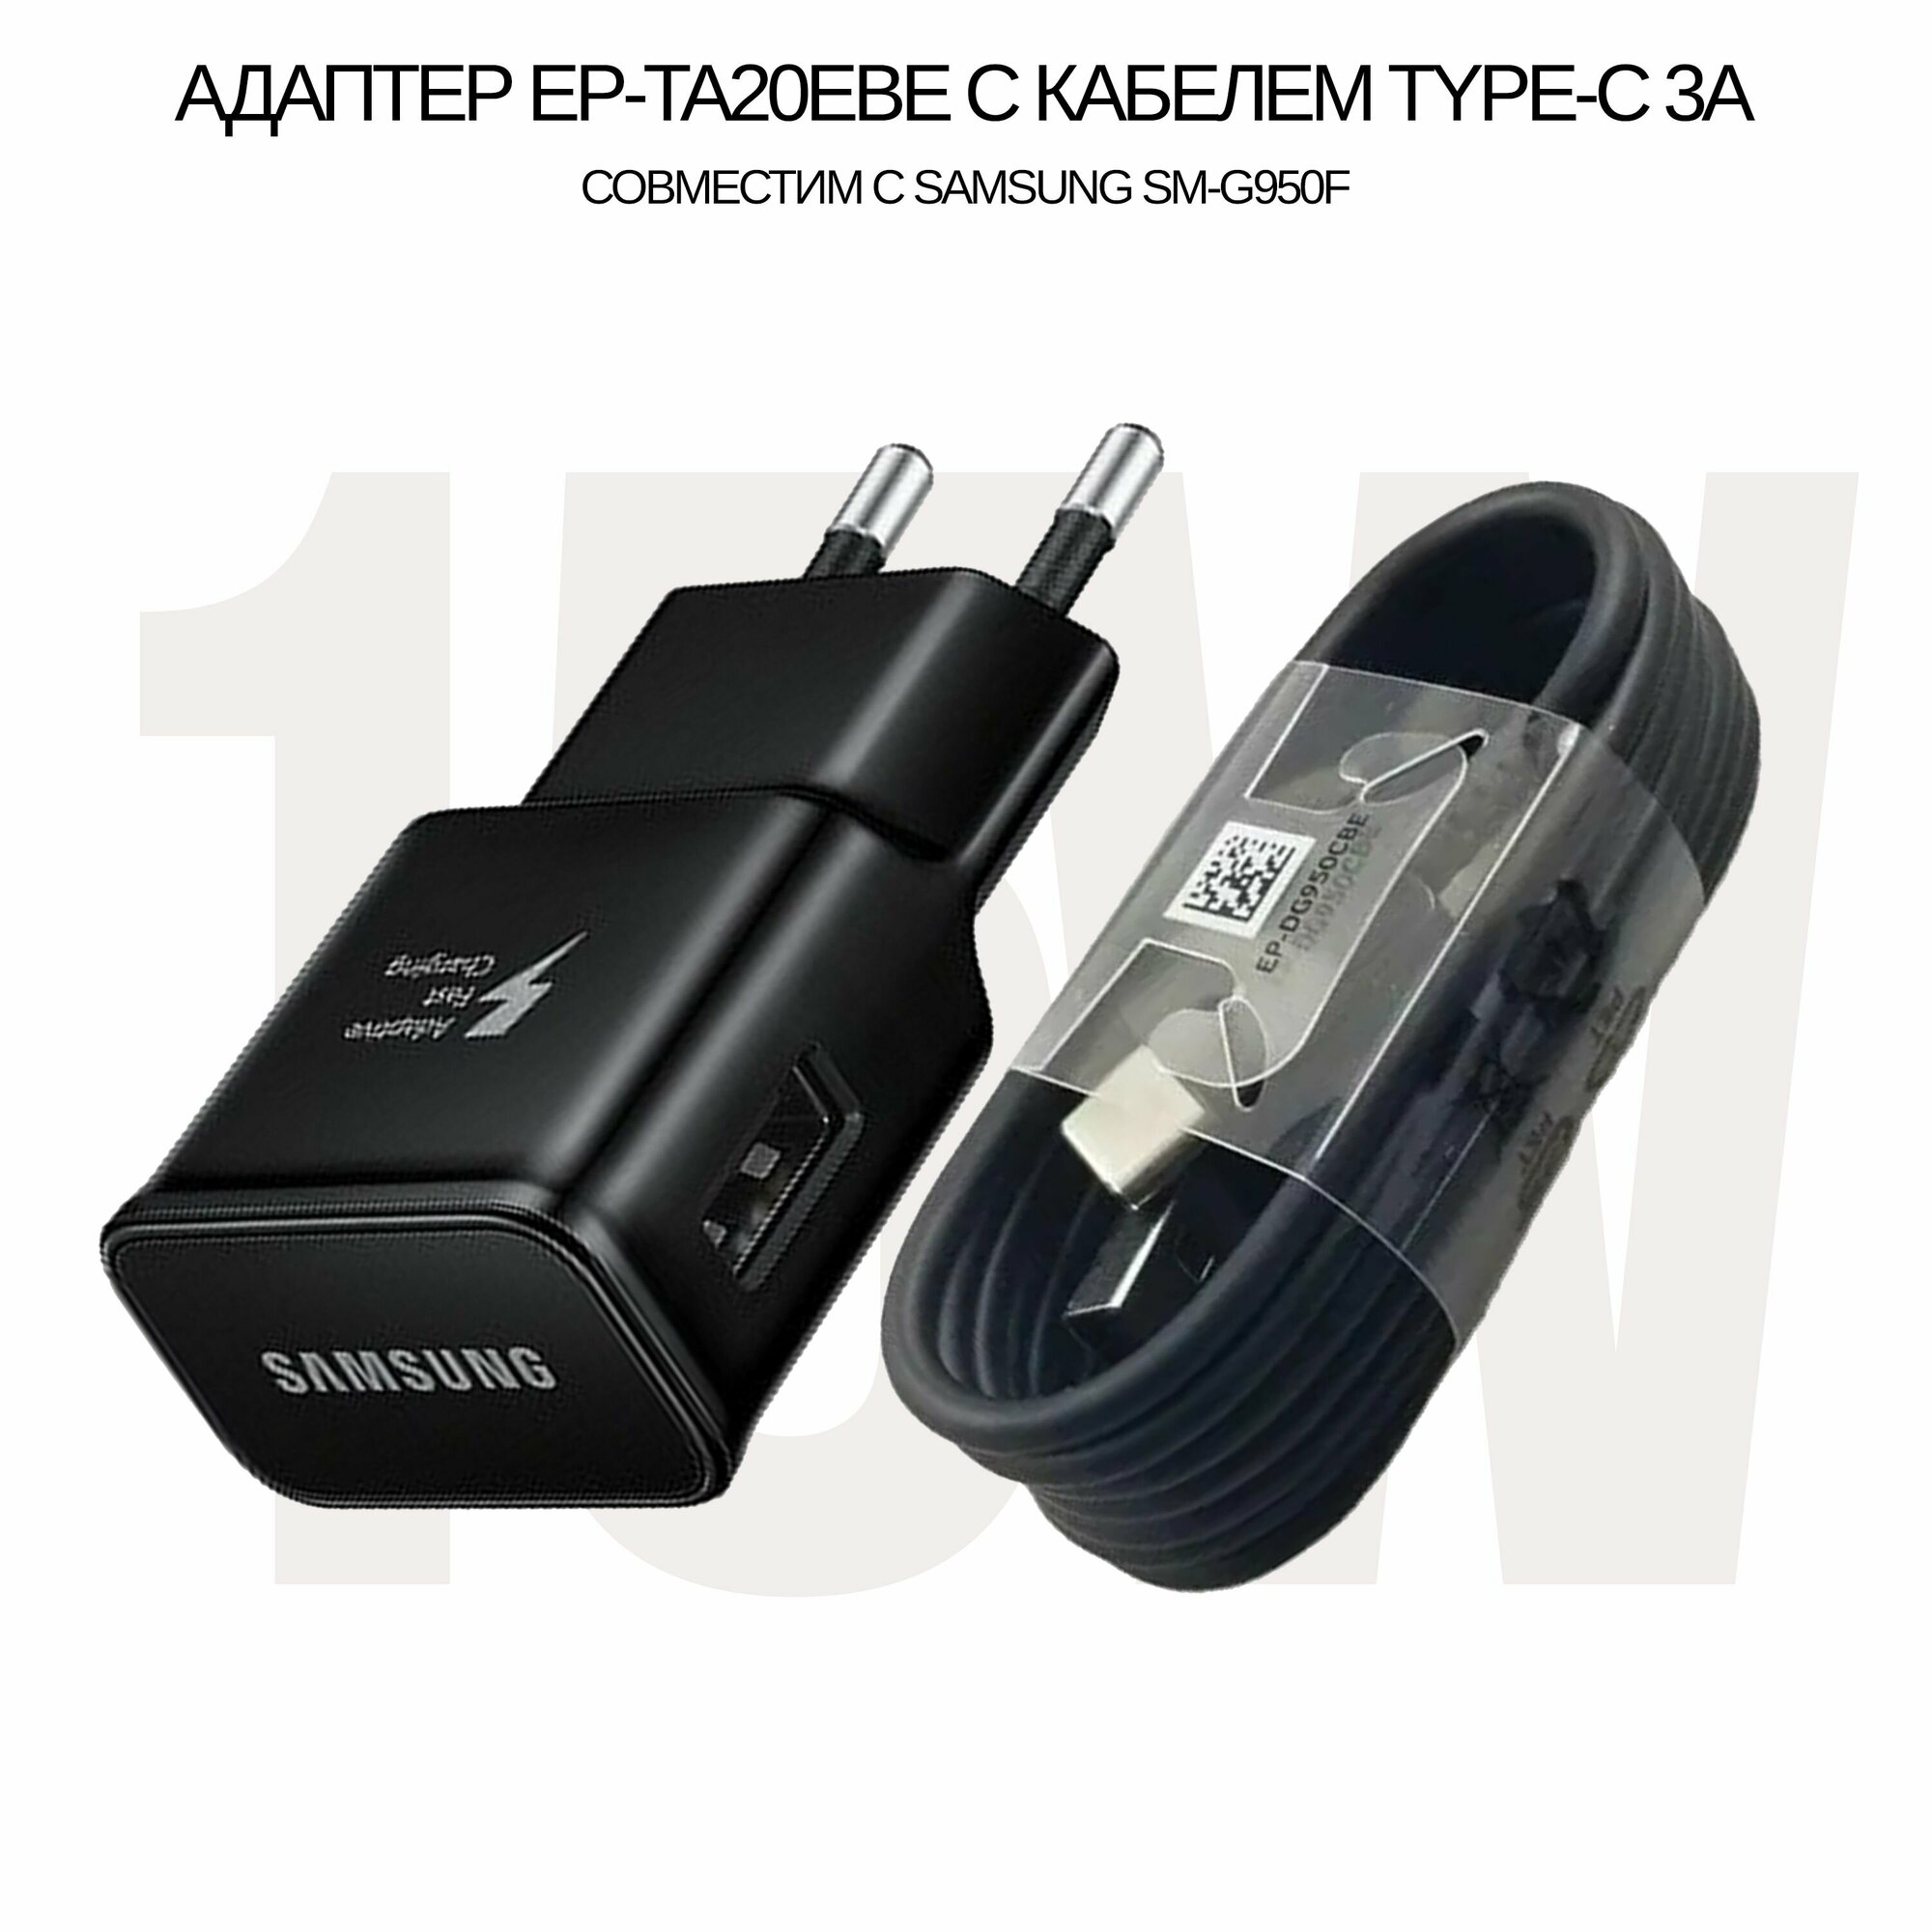 Зарядное устройство EP-TA20EBE 15W с кабелем Type-C 3A (EP-DG950CBE) для Samsung SM-G950F цвет: Black, (без упаковки)